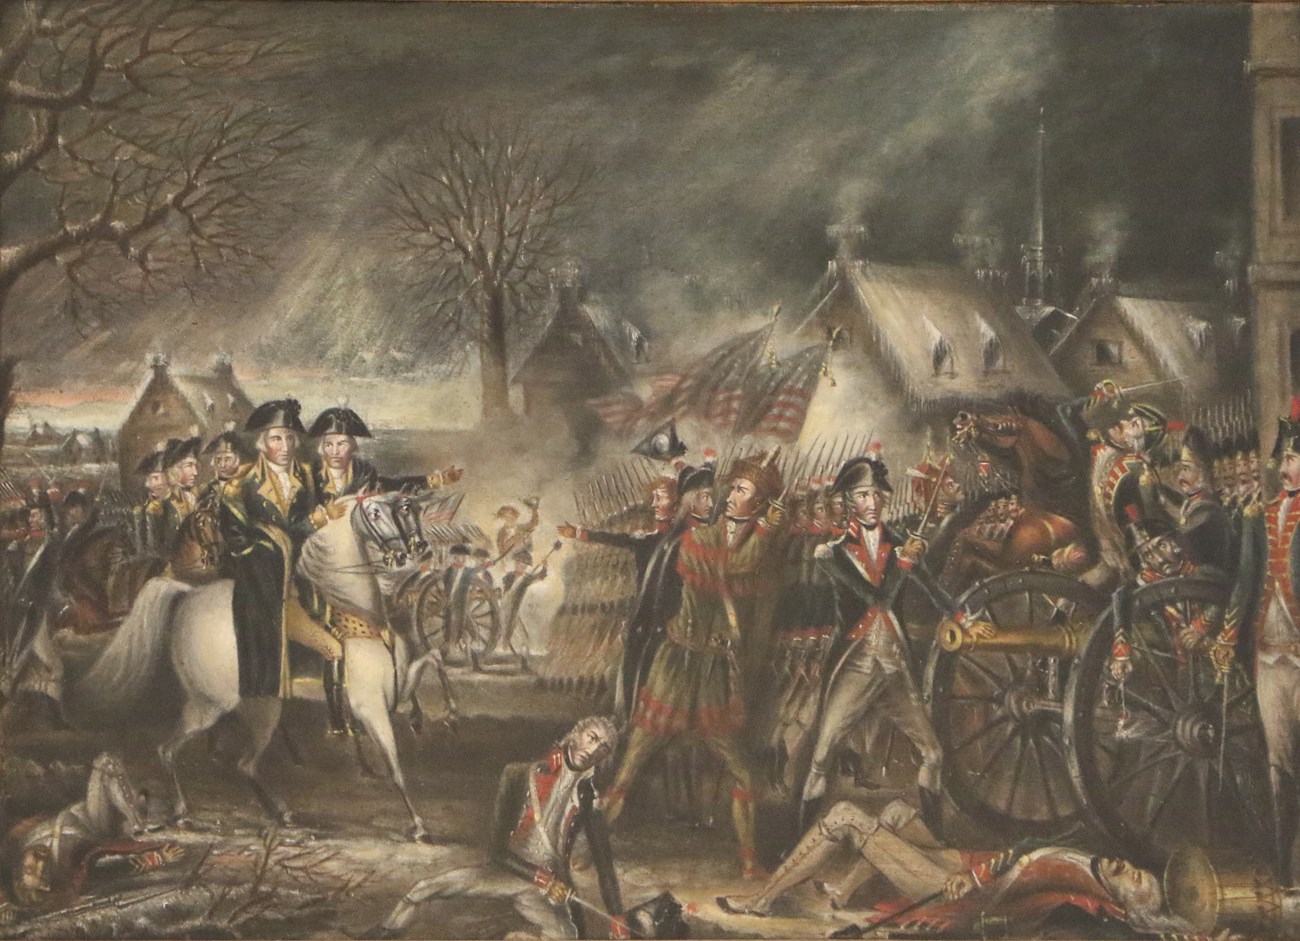 The Battle of Trenton by GWP Custis